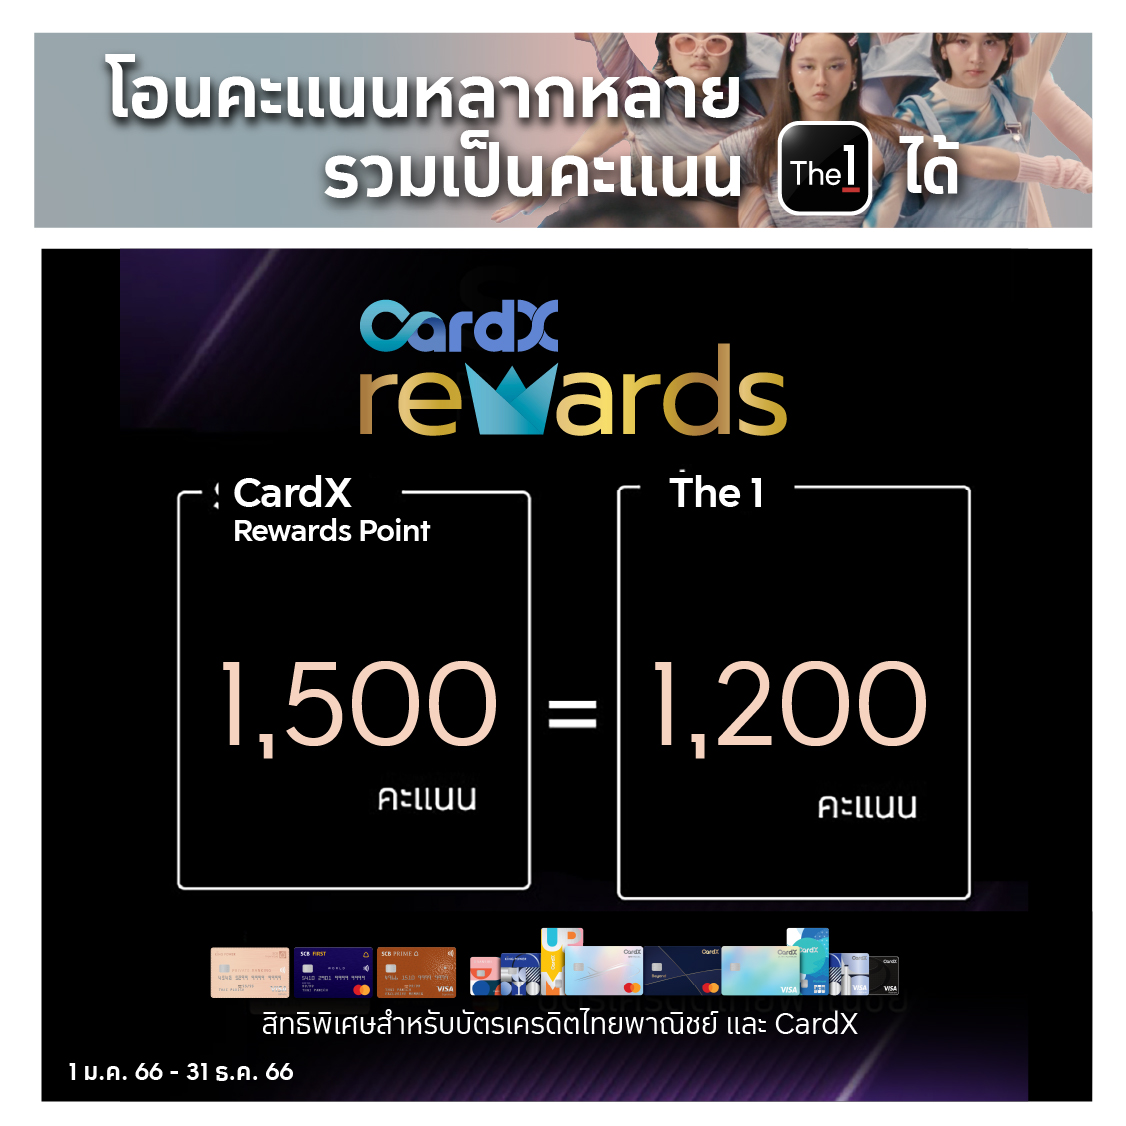 The 1 | Siam Commercial Bank Cardx Rewards โอนคะแนน Cardx Rewards มาเป็น คะแนน The 1 ได้แล้ววันนี้ !